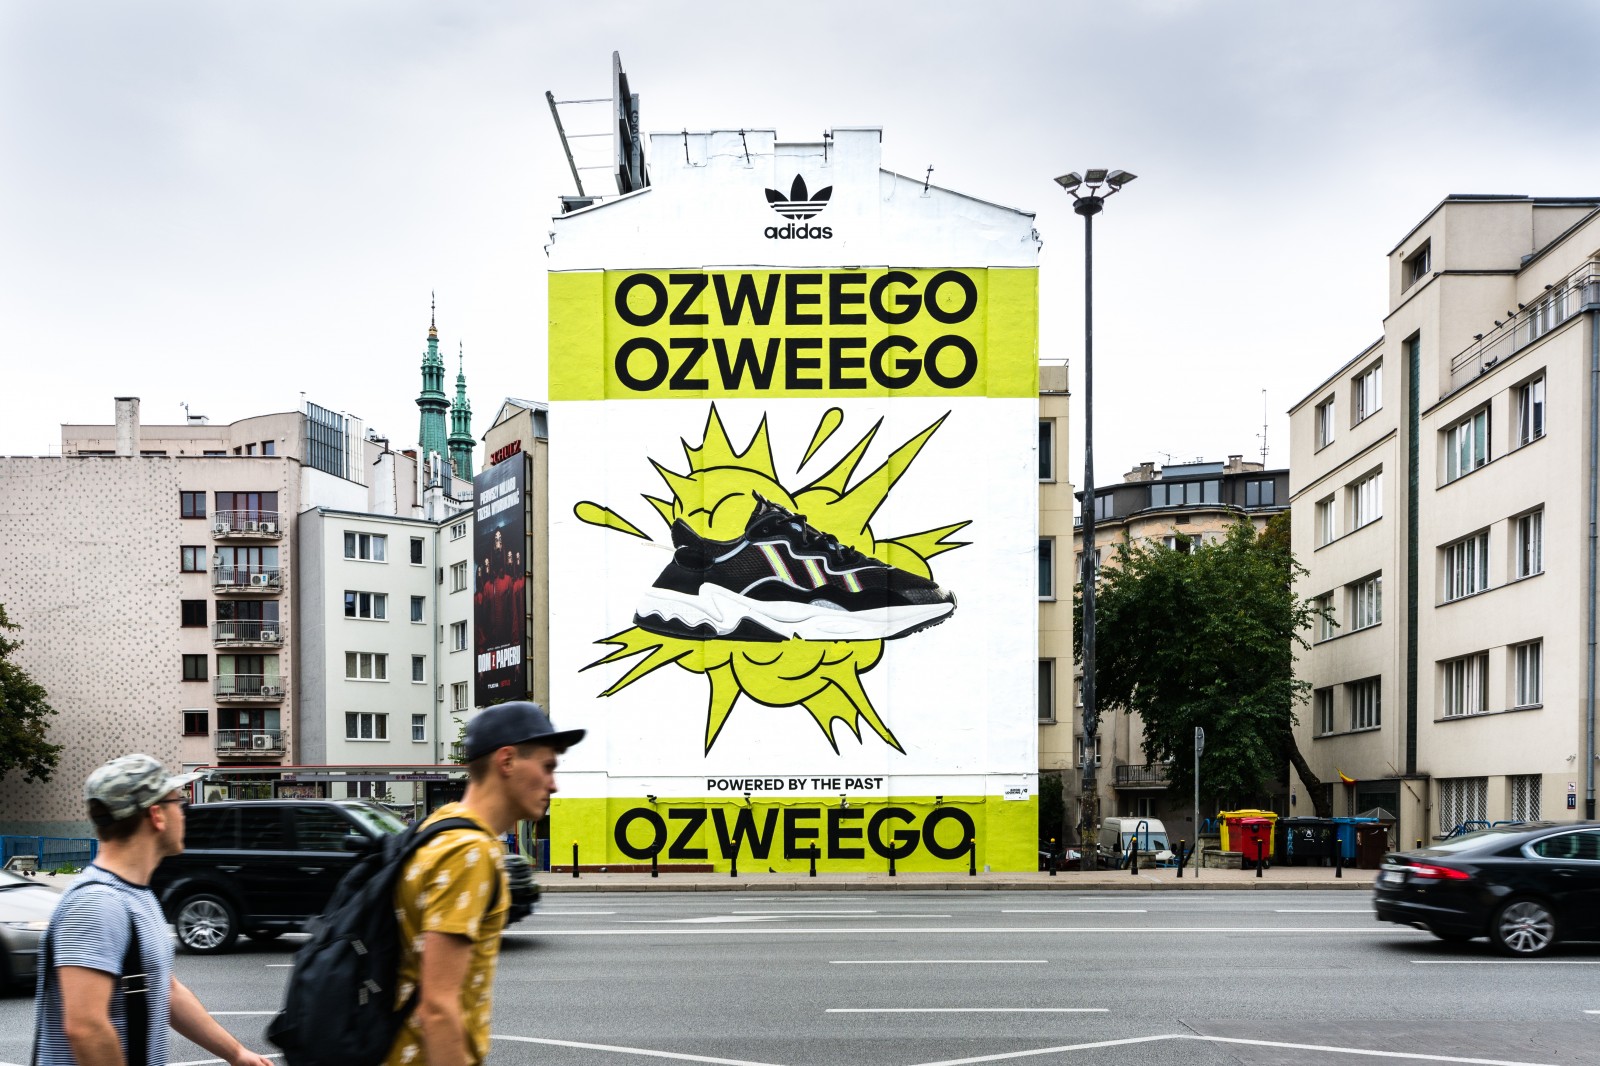 A mural advertising Ozweego for the Adidas Originals brand in Warsaw | Adidas Ozweego | Portfolio